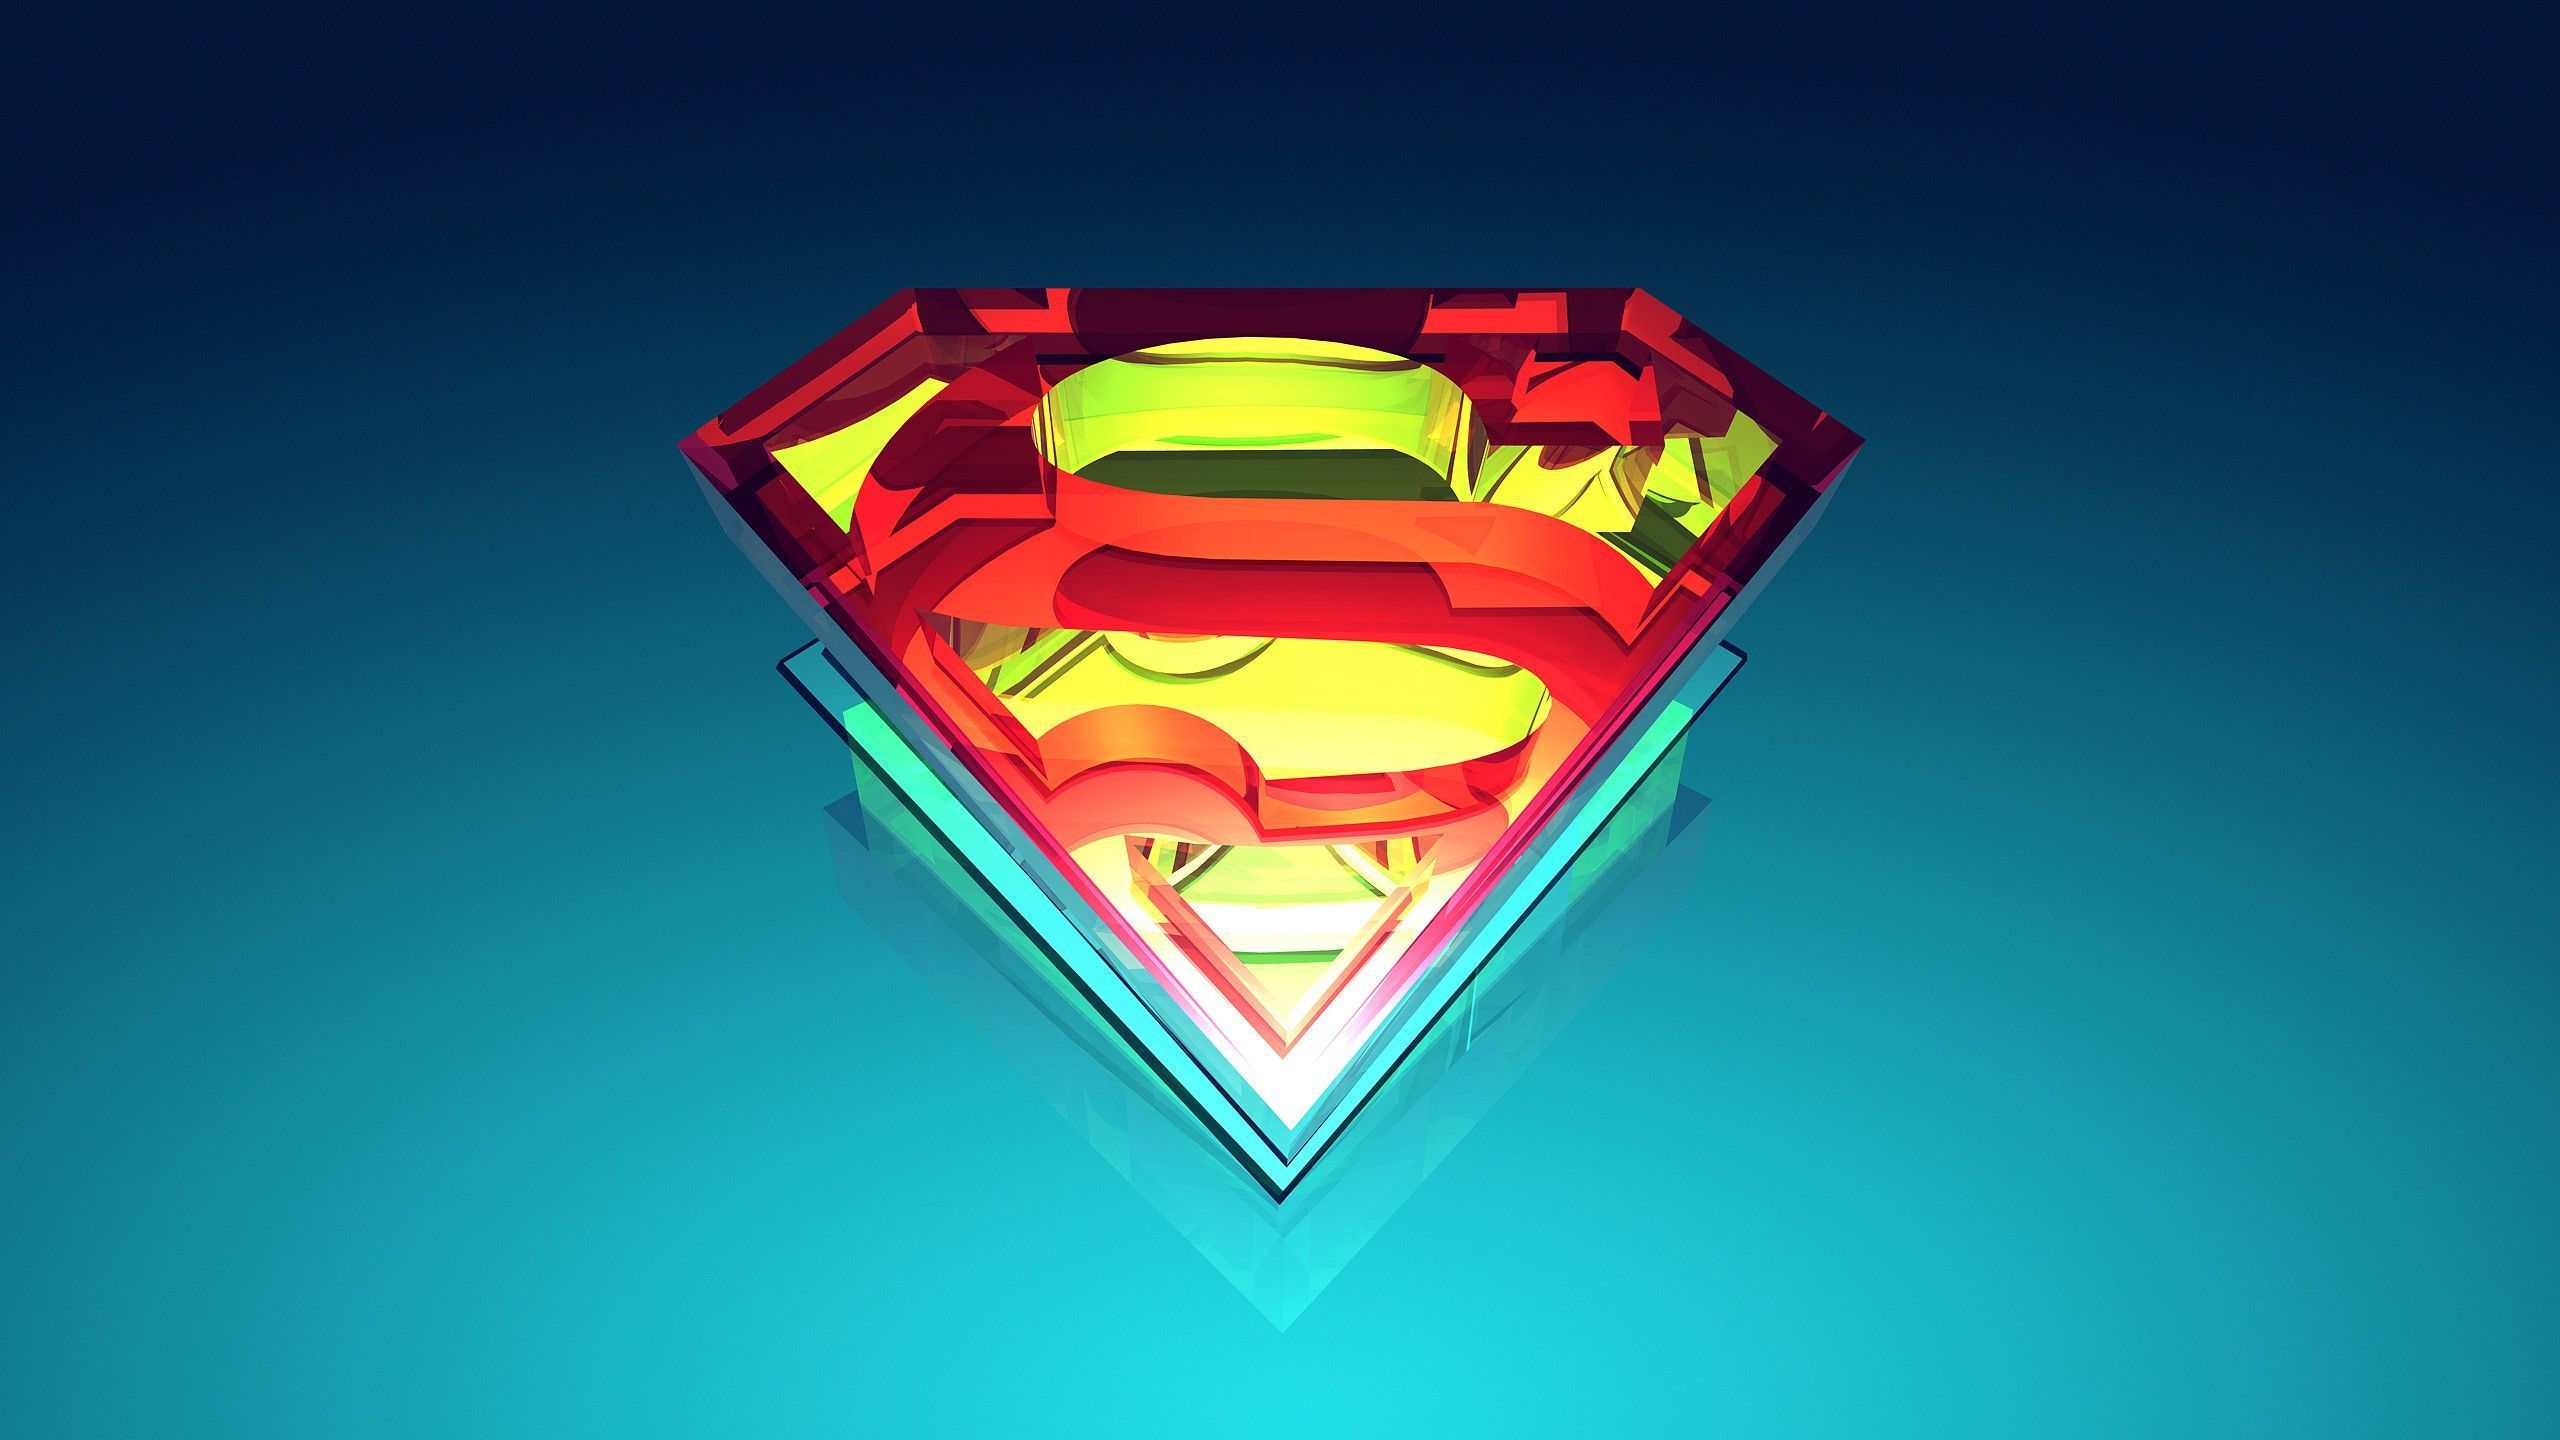 Abstract superman logo wallpaper jpg 298688